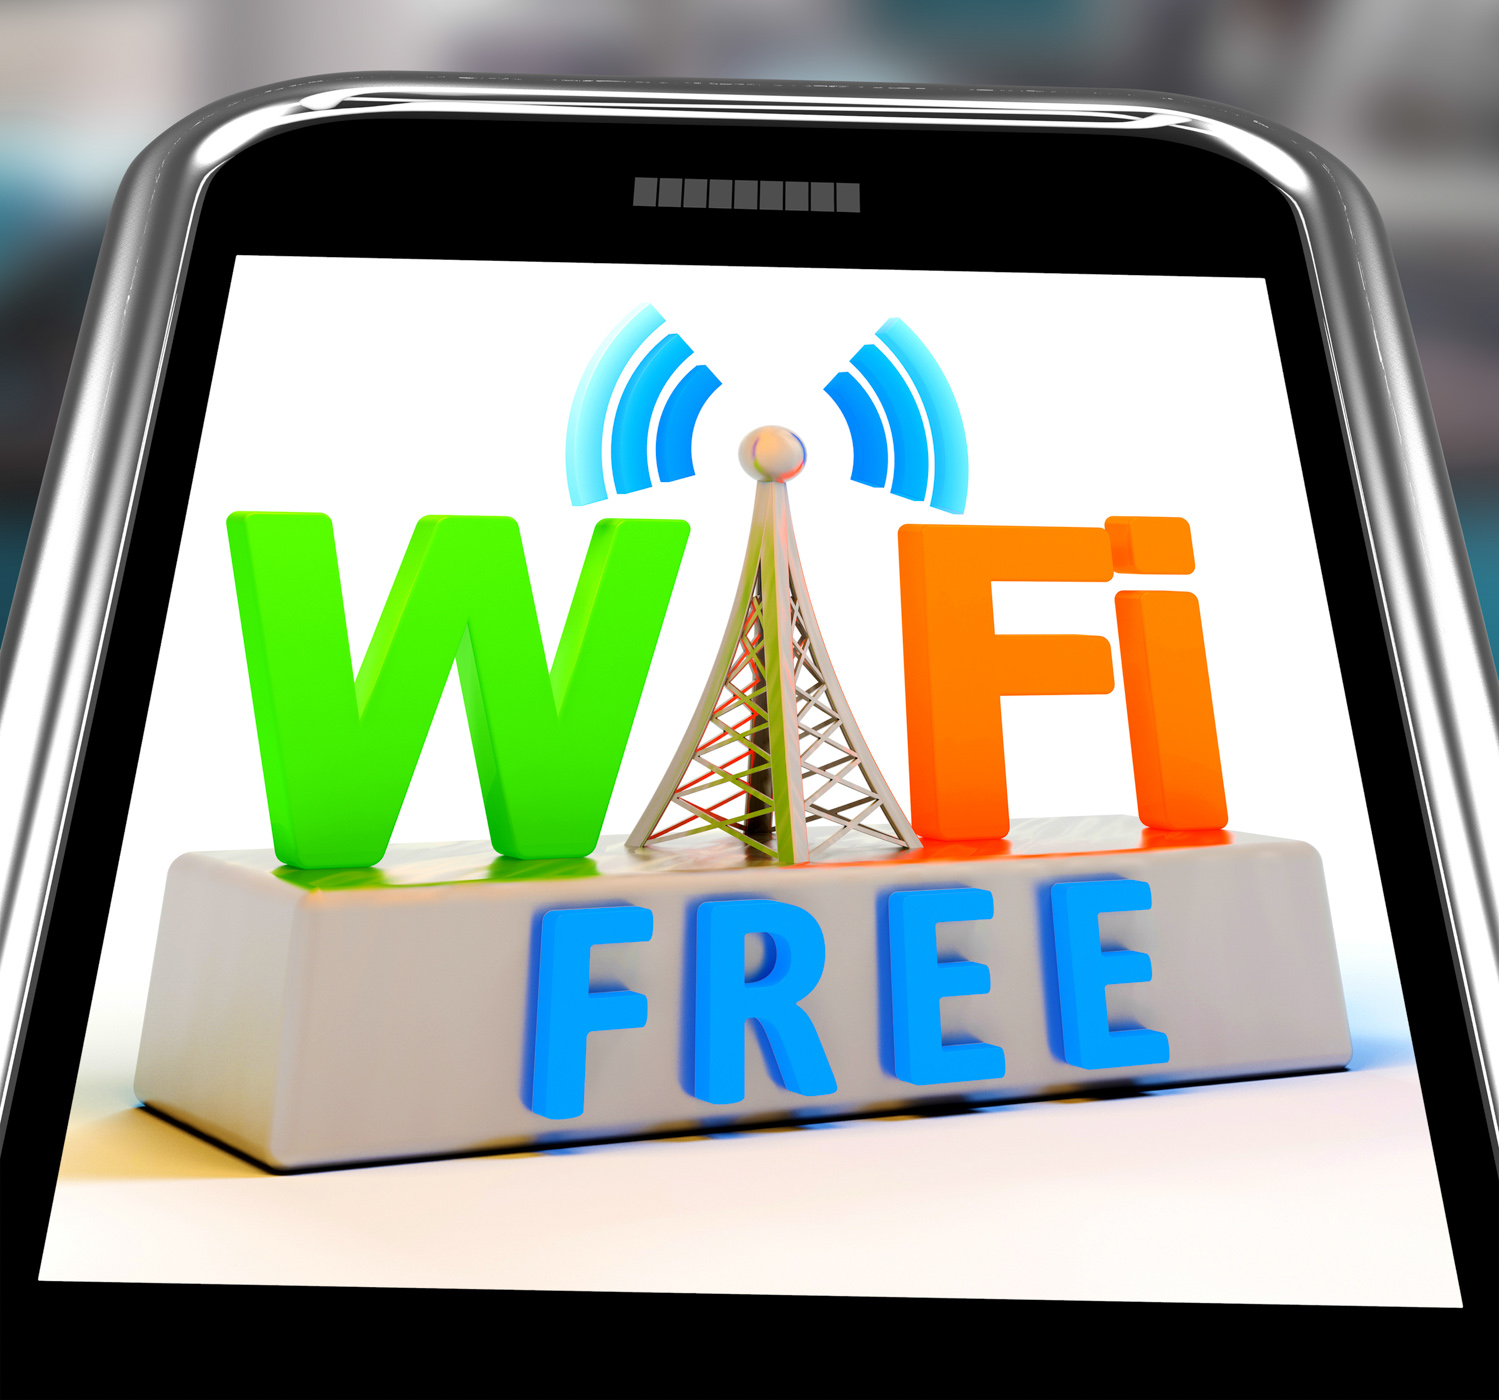 Wifi free on smartphone showing wifi broadcasting area photo